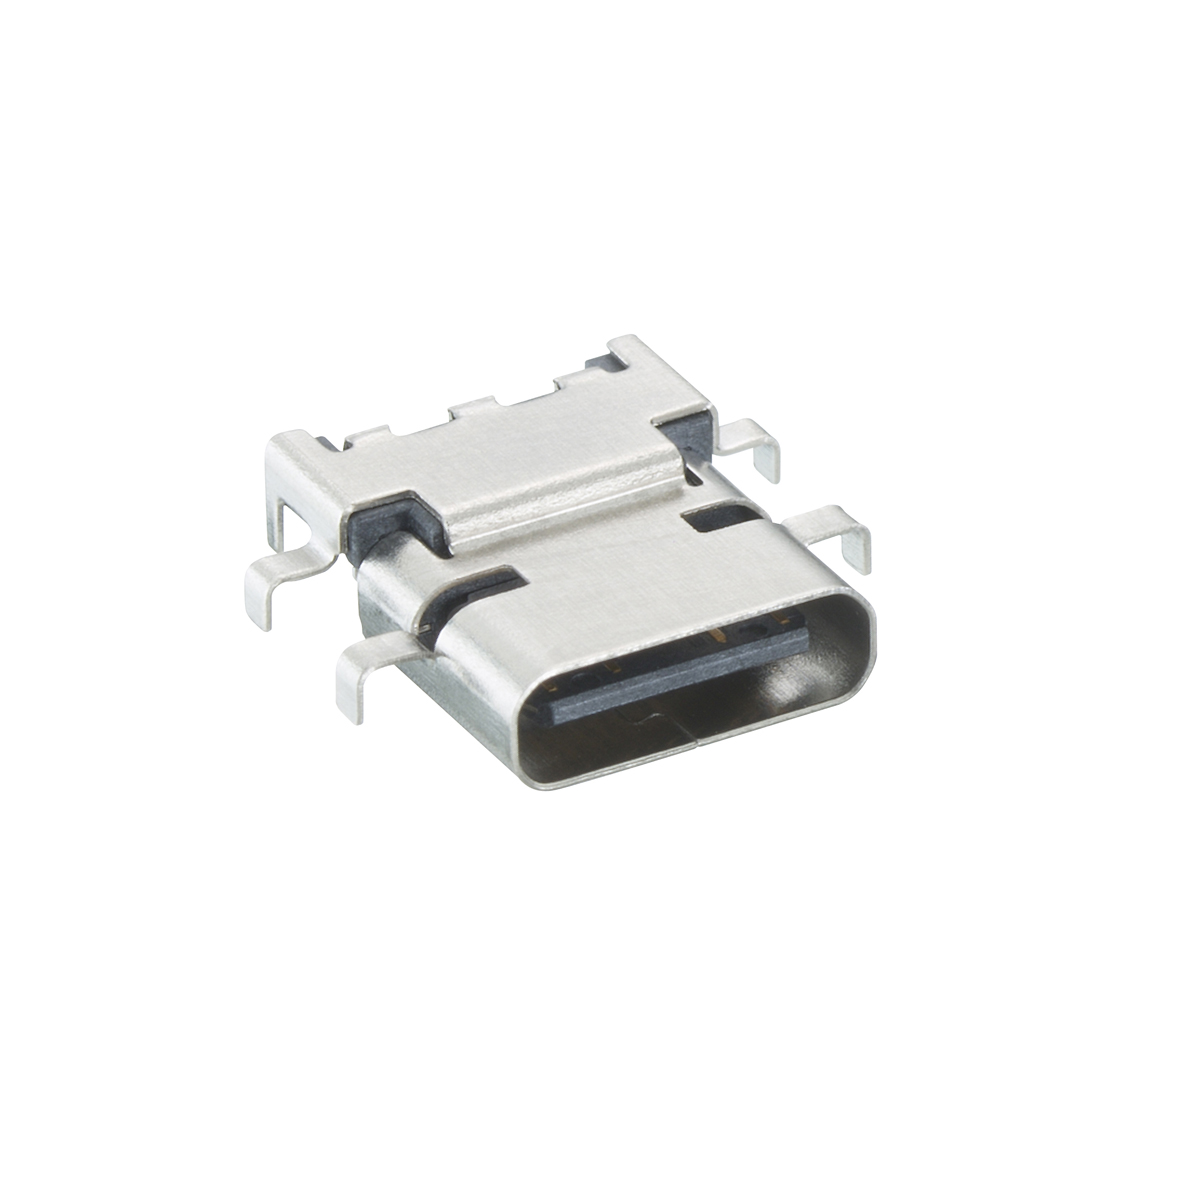 Lumberg: 2436 03 (Series 24 | USB and IEEE 1394 connectors)